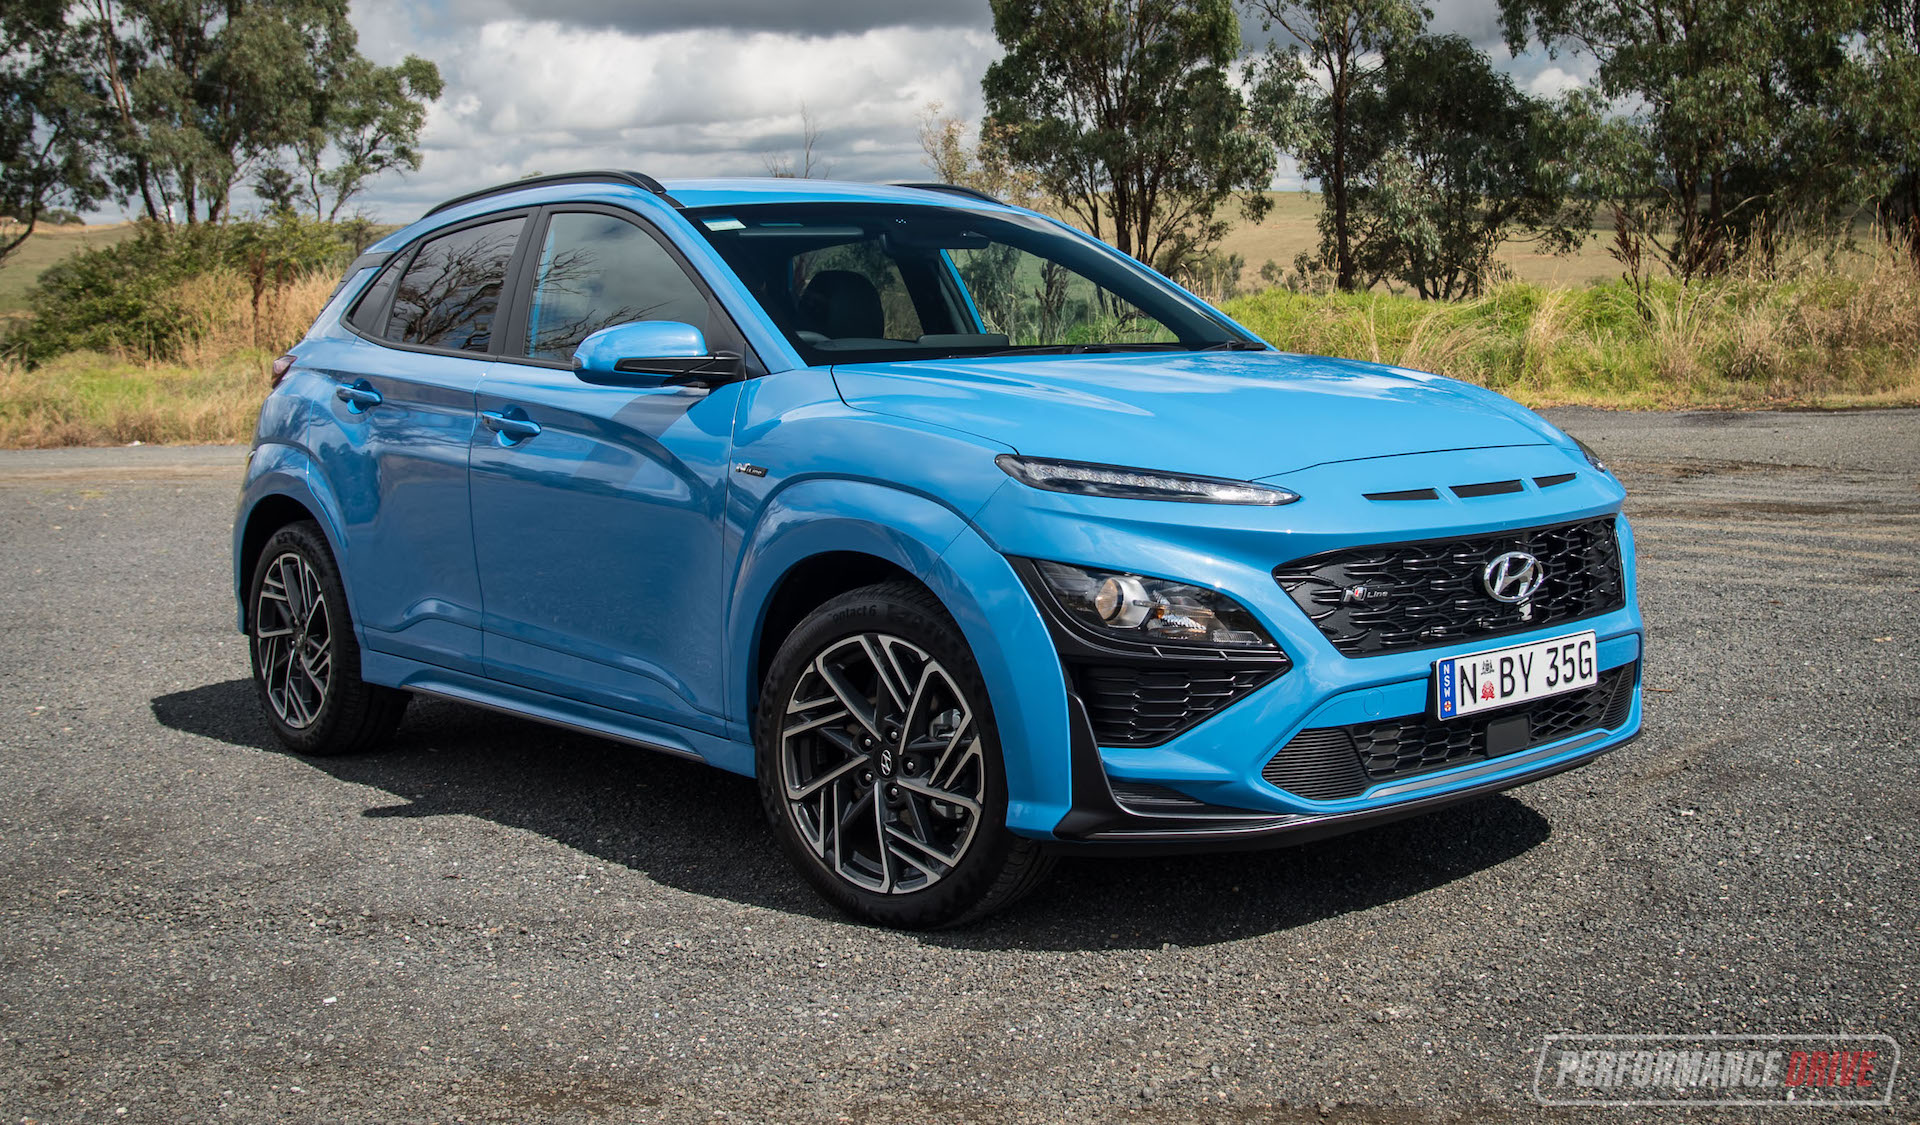 2021 Hyundai Kona review - Australian launch (video) | PerformanceDrive